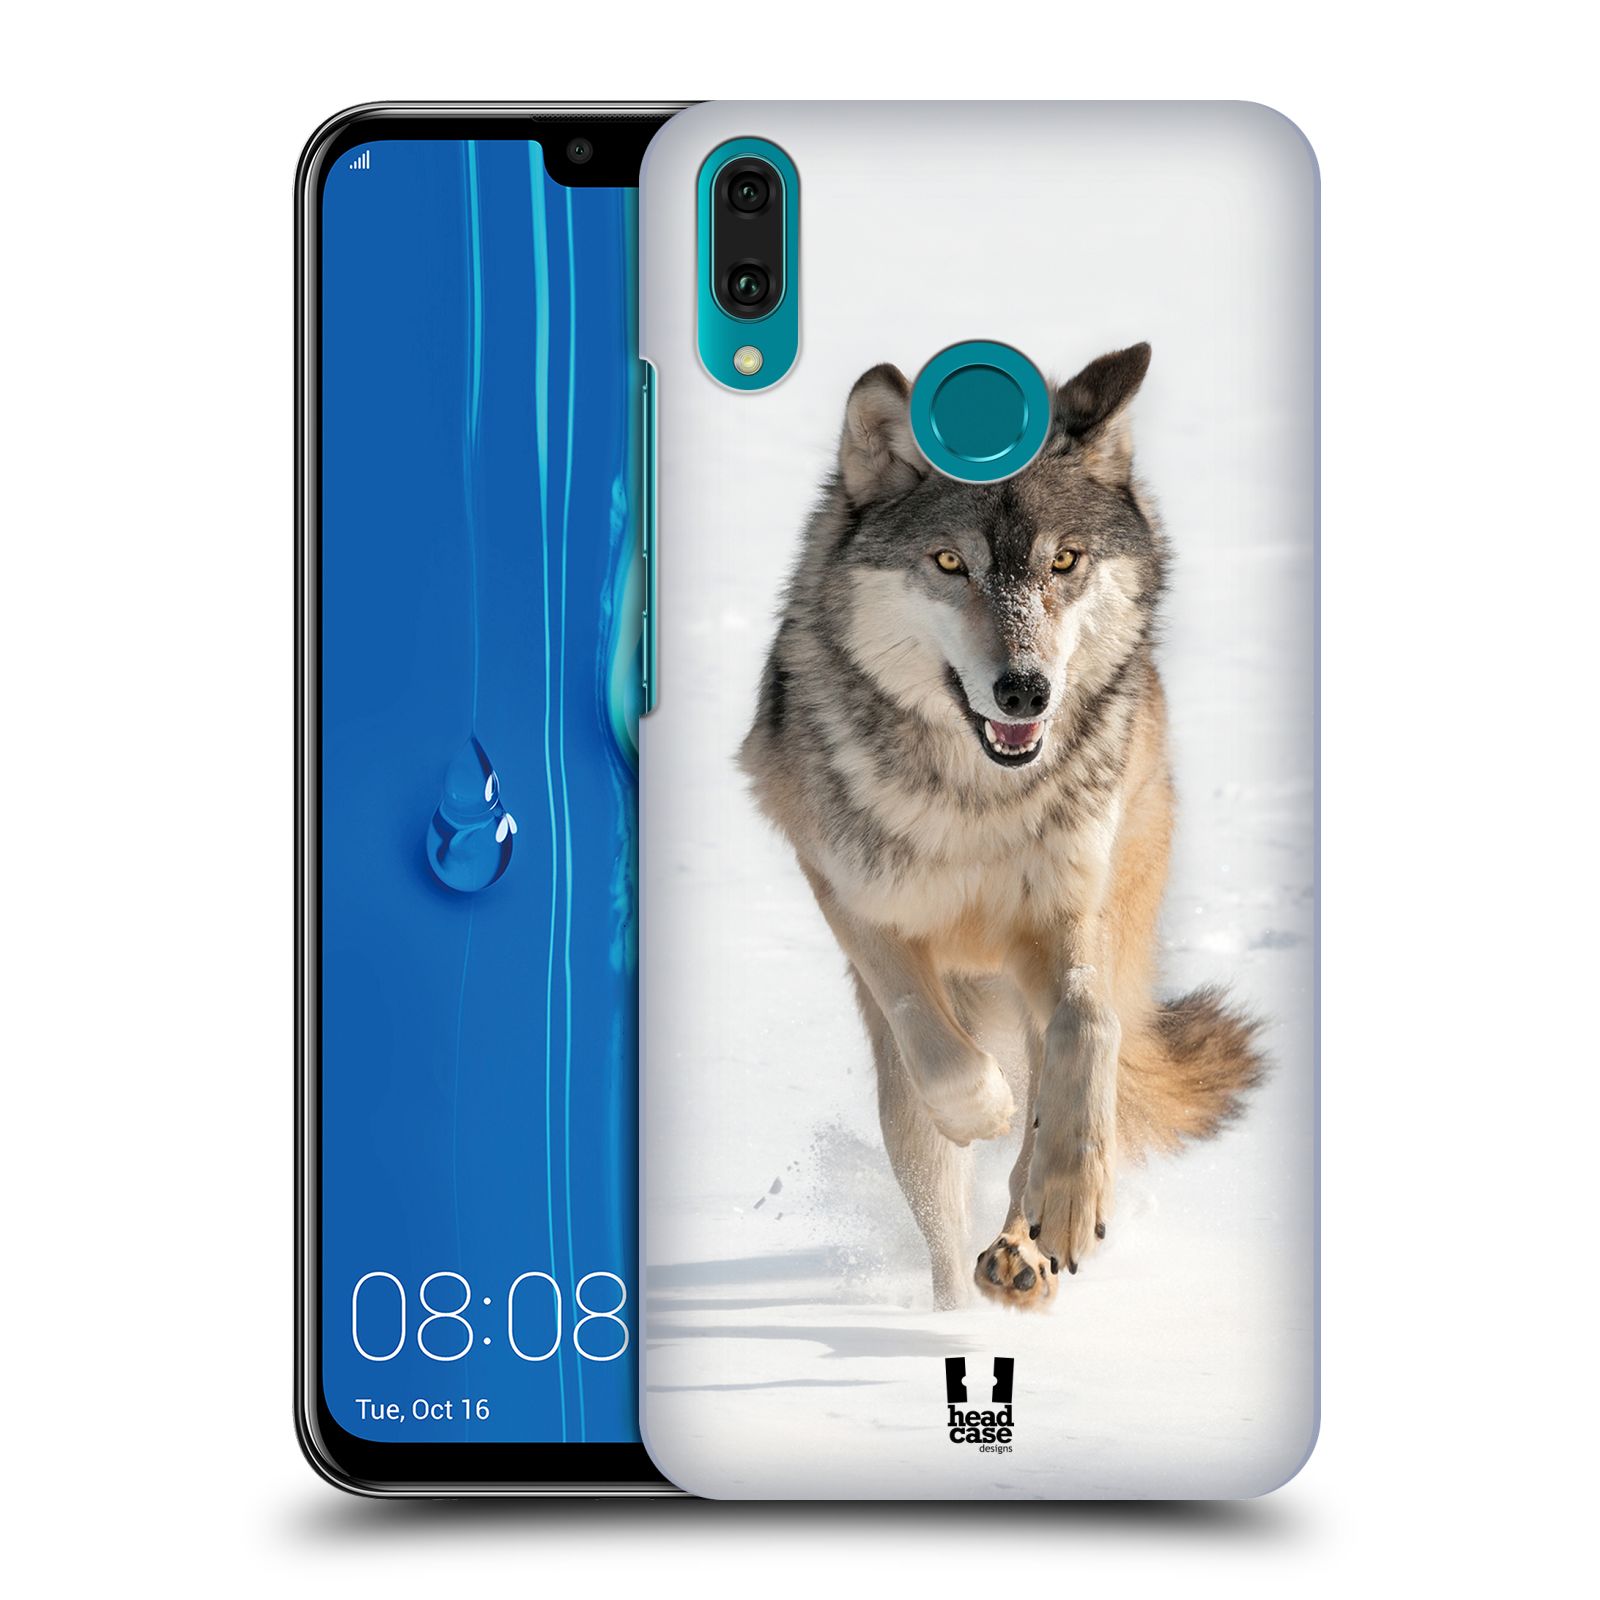 Pouzdro na mobil Huawei Y9 2019 - HEAD CASE - vzor Divočina, Divoký život a zvířata foto BĚŽÍCÍ VLK